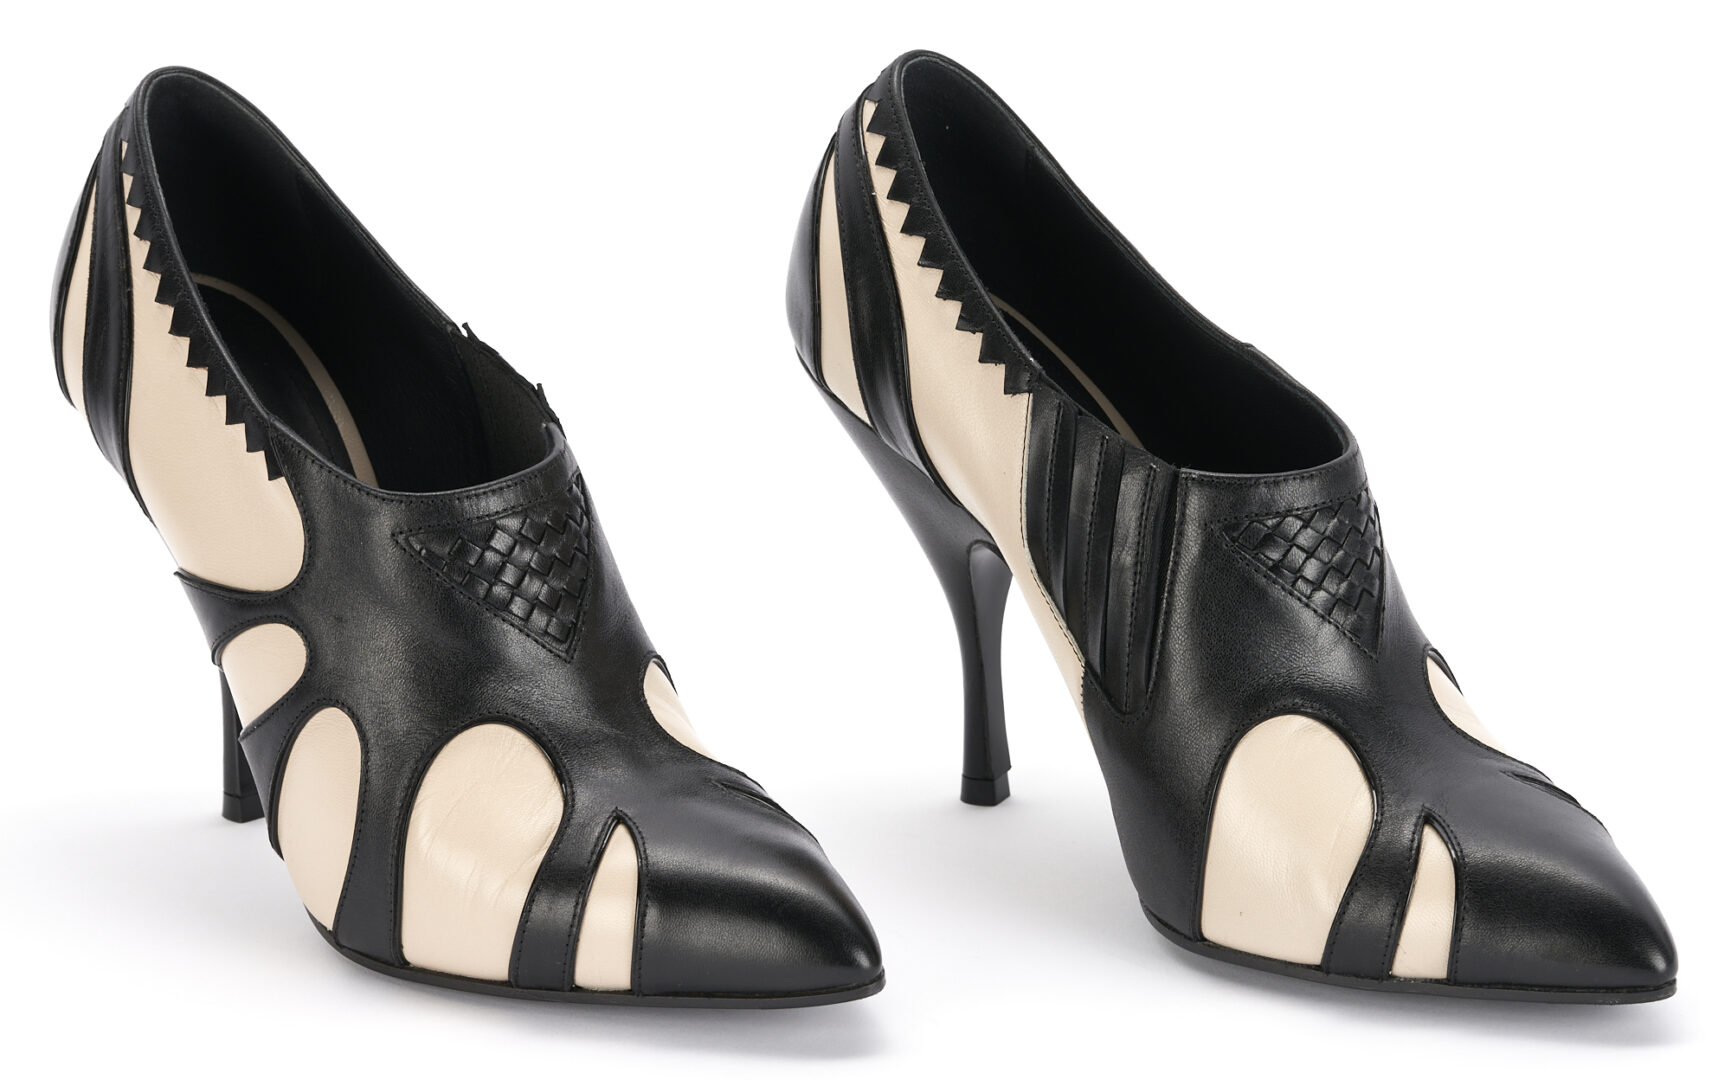 Lot 1232: 3 Pairs of Bottega Veneta Shoes, incl. Lizard Madame Pumps, Round Toe Heels, Two-Tone Booties